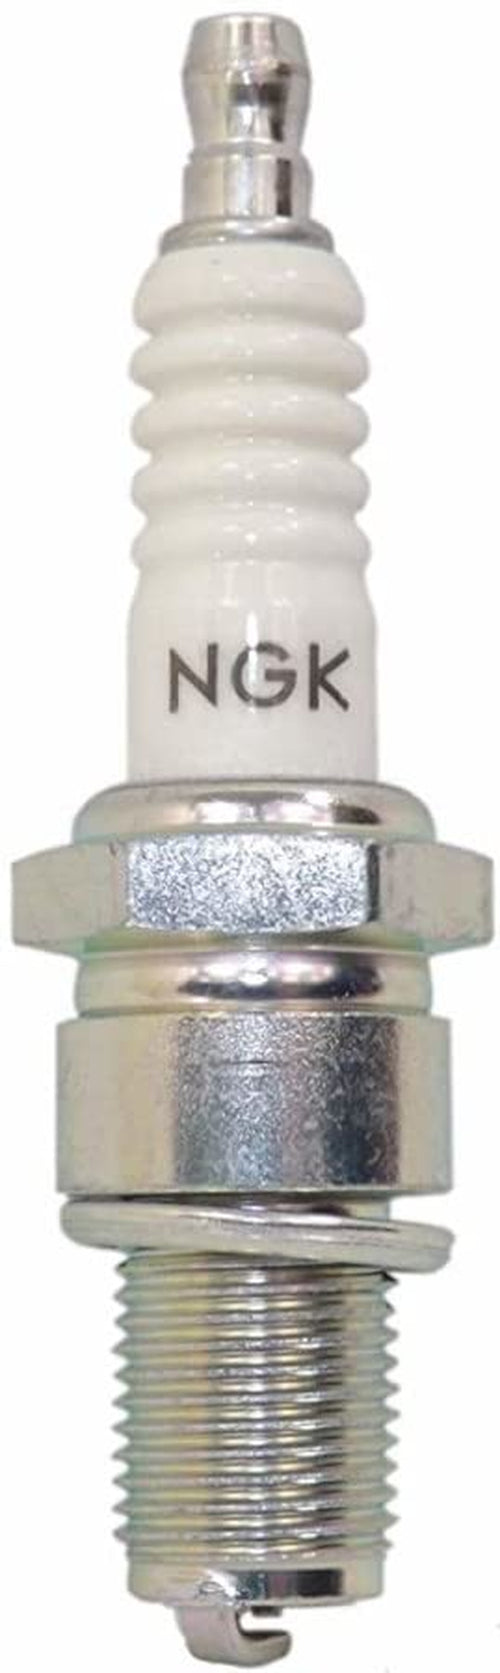 (4706) MAR10A-J Standard Spark Plug, Pack of 1